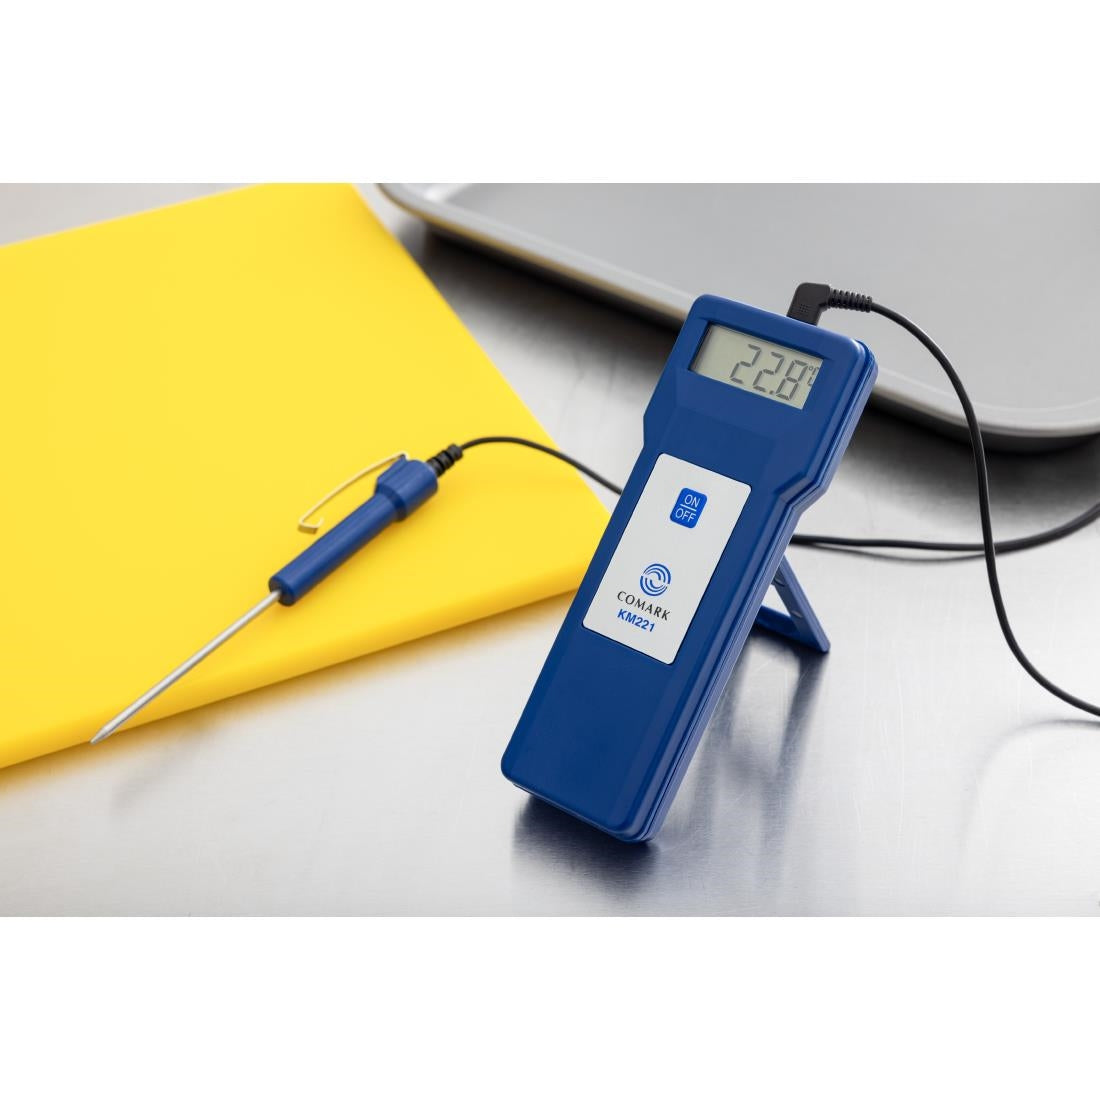 GJ465 Comark Digital Thermometer JD Catering Equipment Solutions Ltd